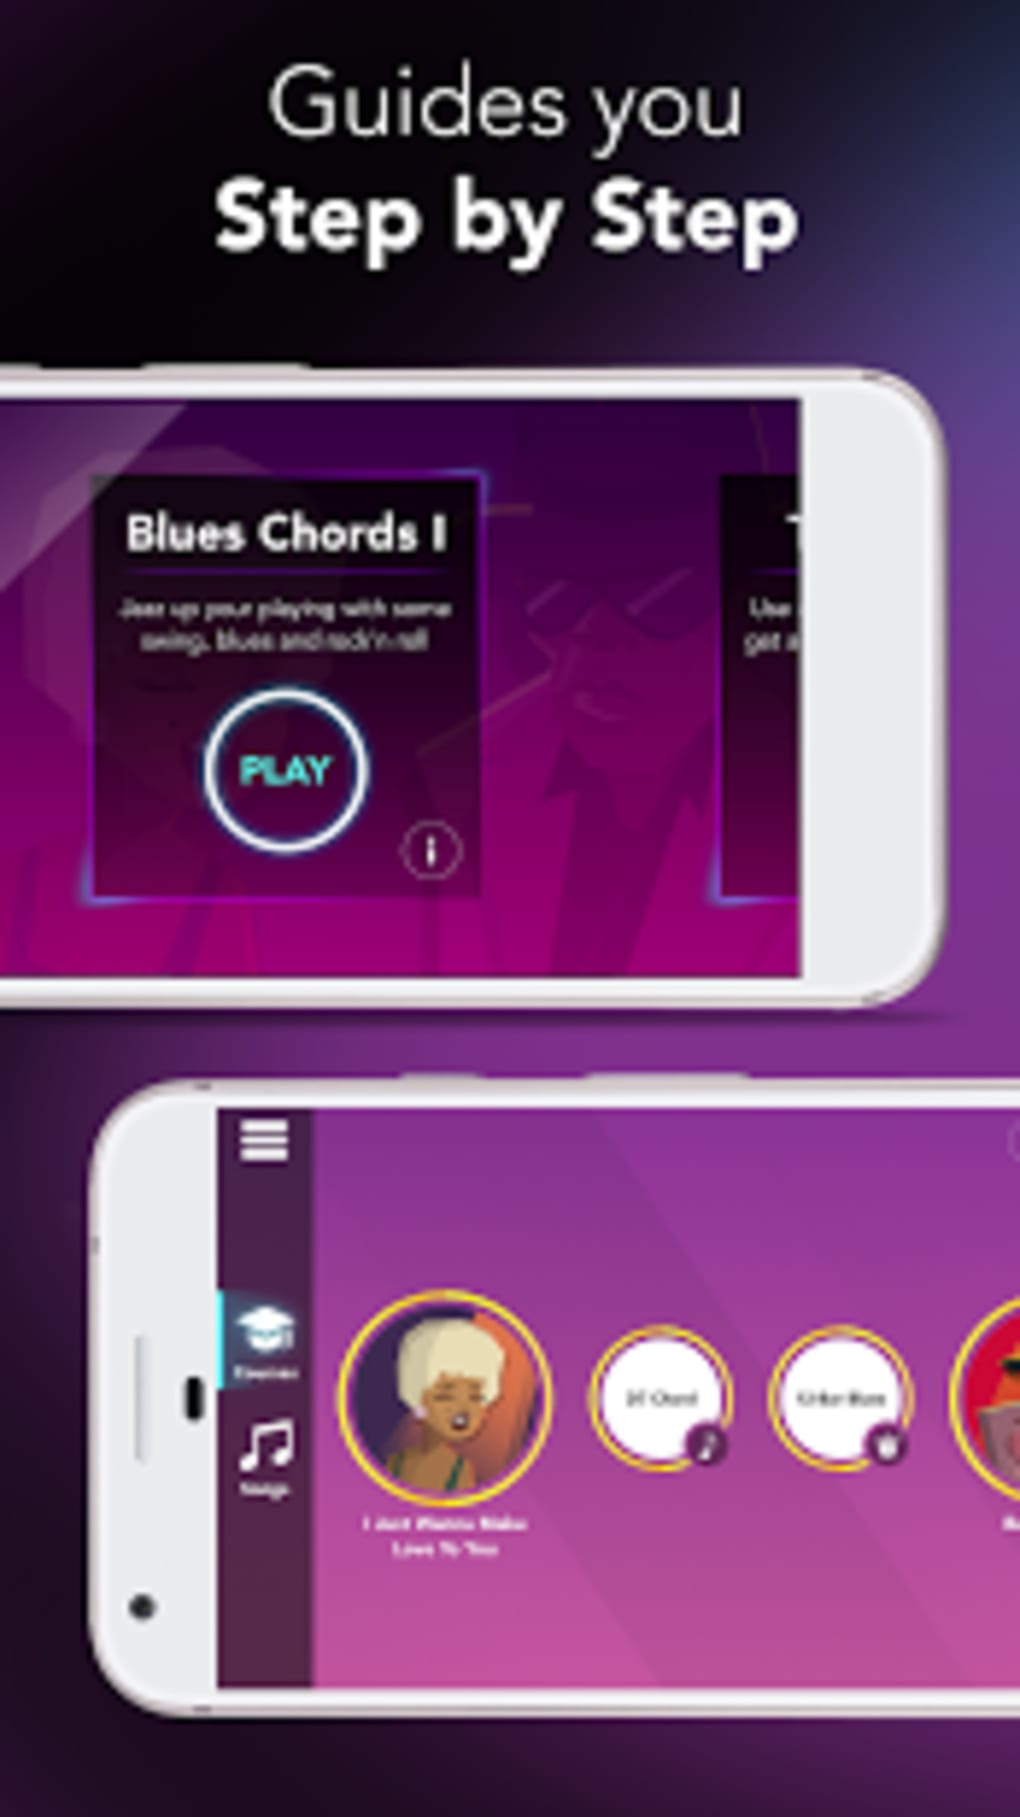 Simply Piano, da JoyTunes - Baixar APK para Android